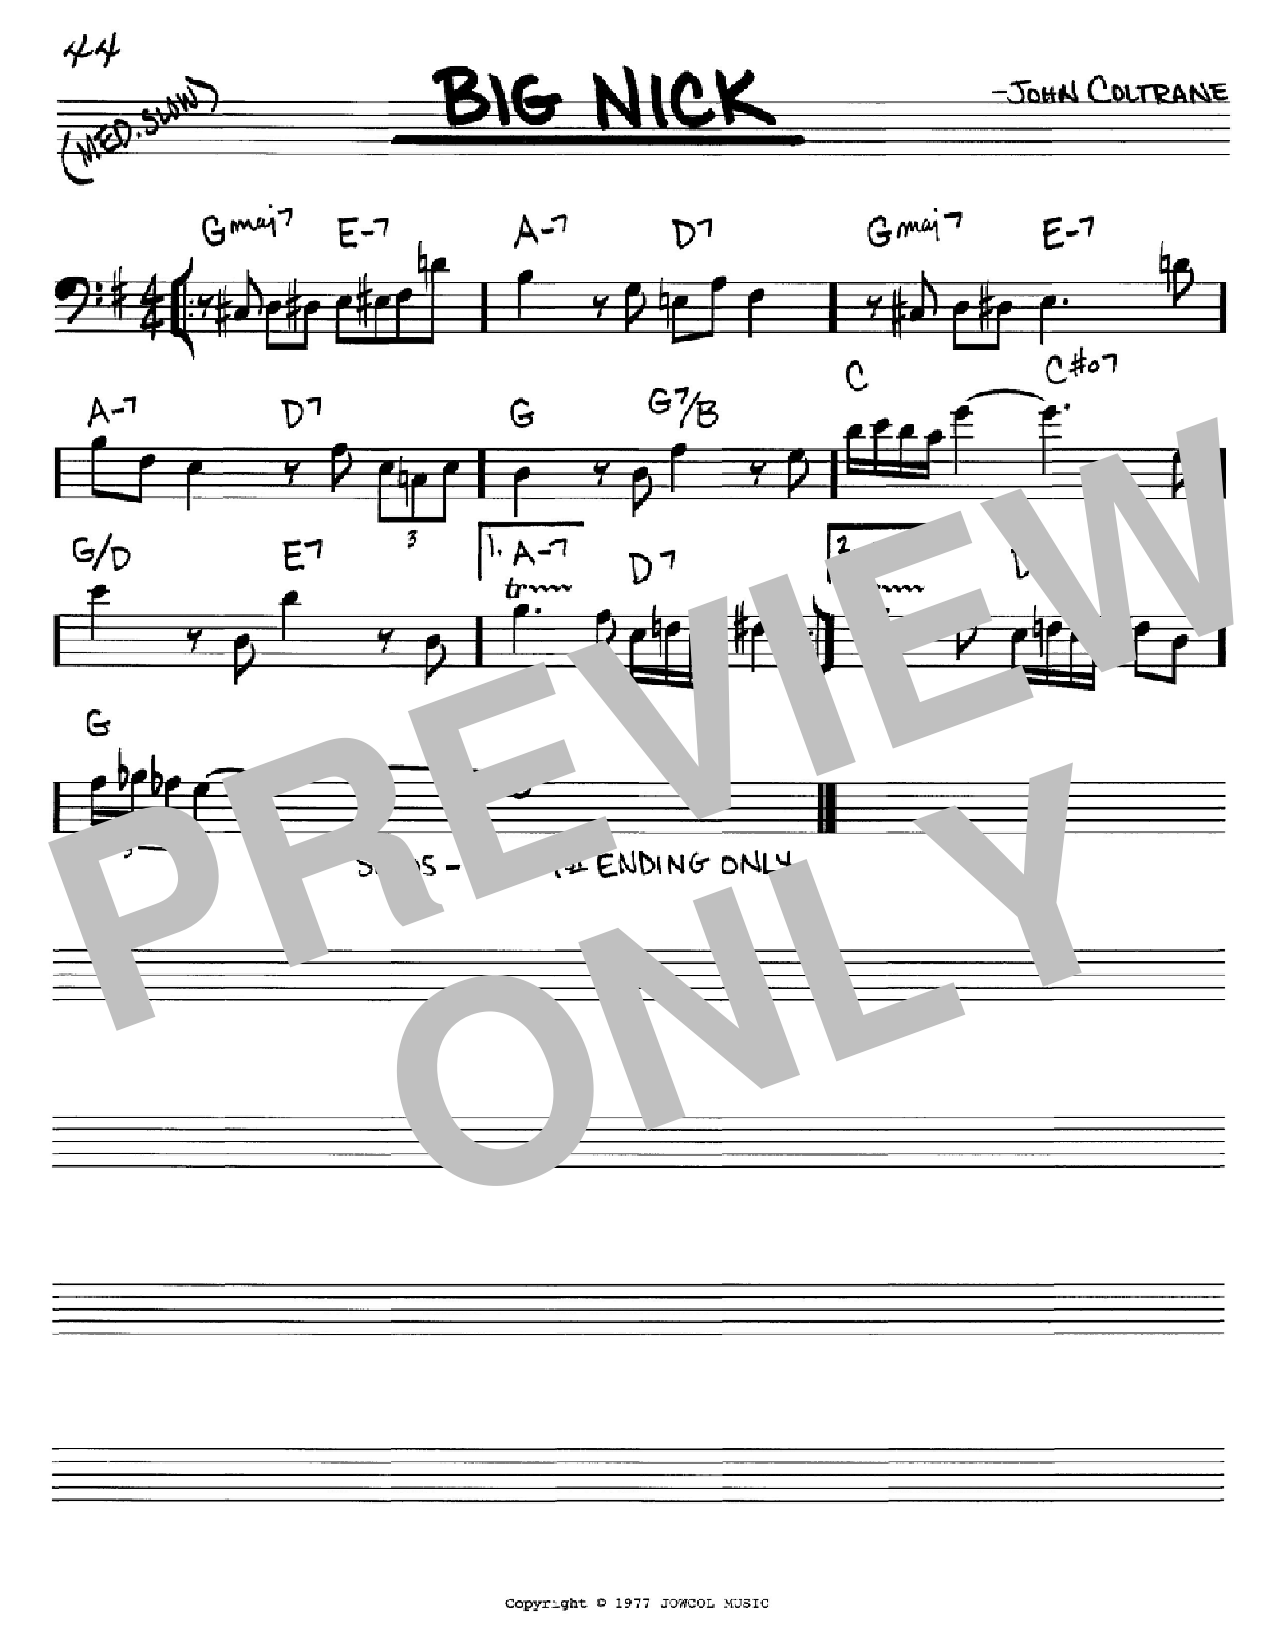 John Coltrane Big Nick Sheet Music Notes & Chords for Real Book – Melody & Chords - Download or Print PDF